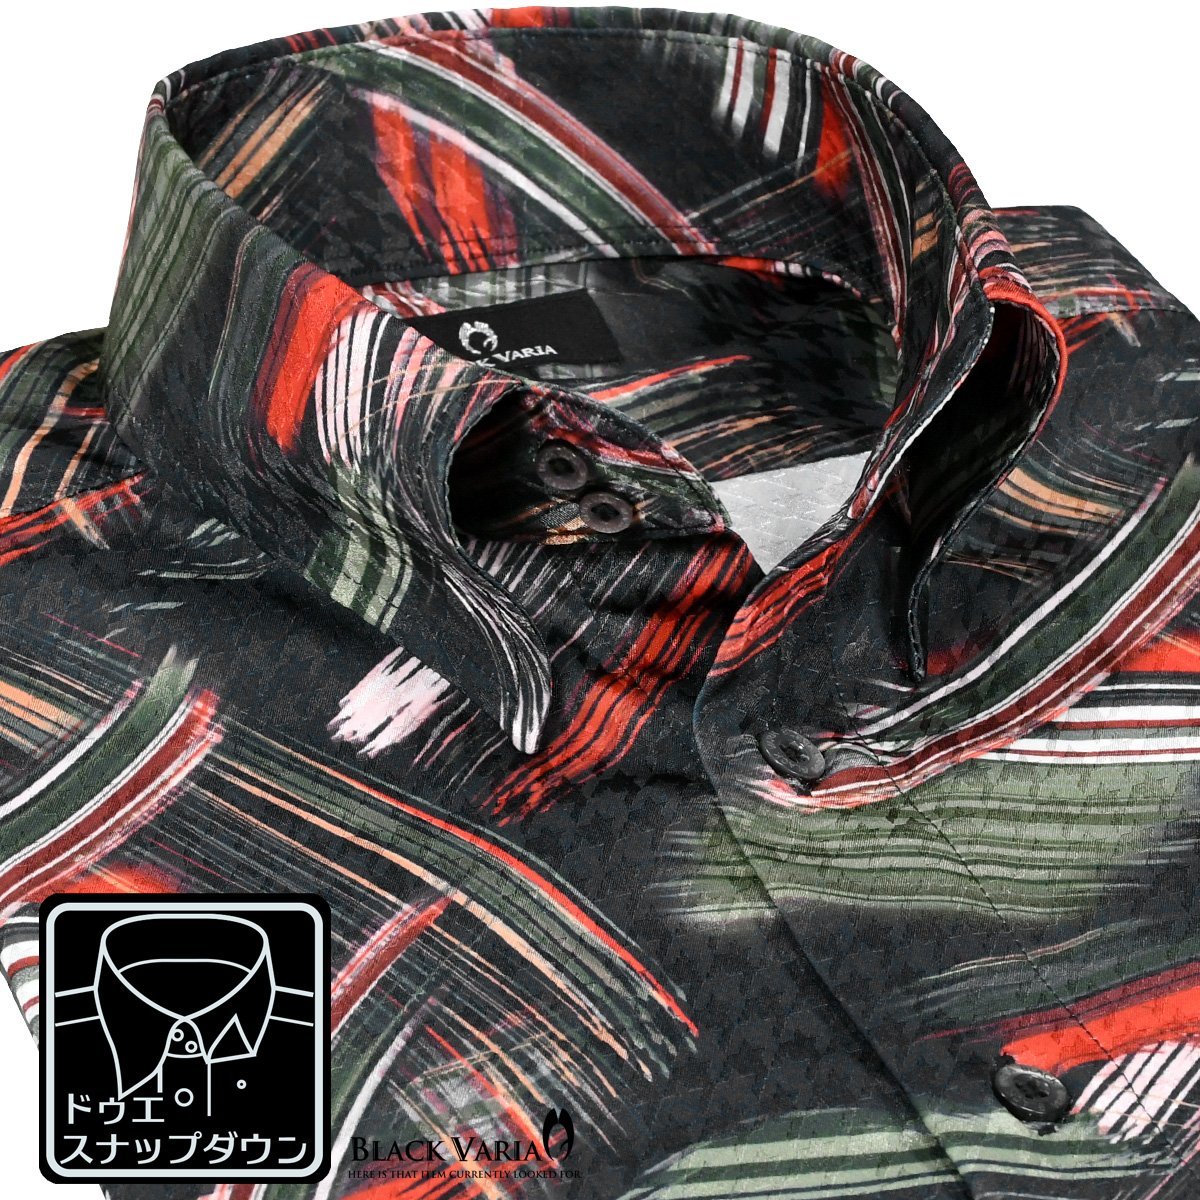 221252-bk BlackVaria ドゥエボットーニ 幾何学 筆模様 ドレスシャツ 衿先スナップボタン 千鳥ジャガード メンズ(ブラック黒グリーン緑) XL